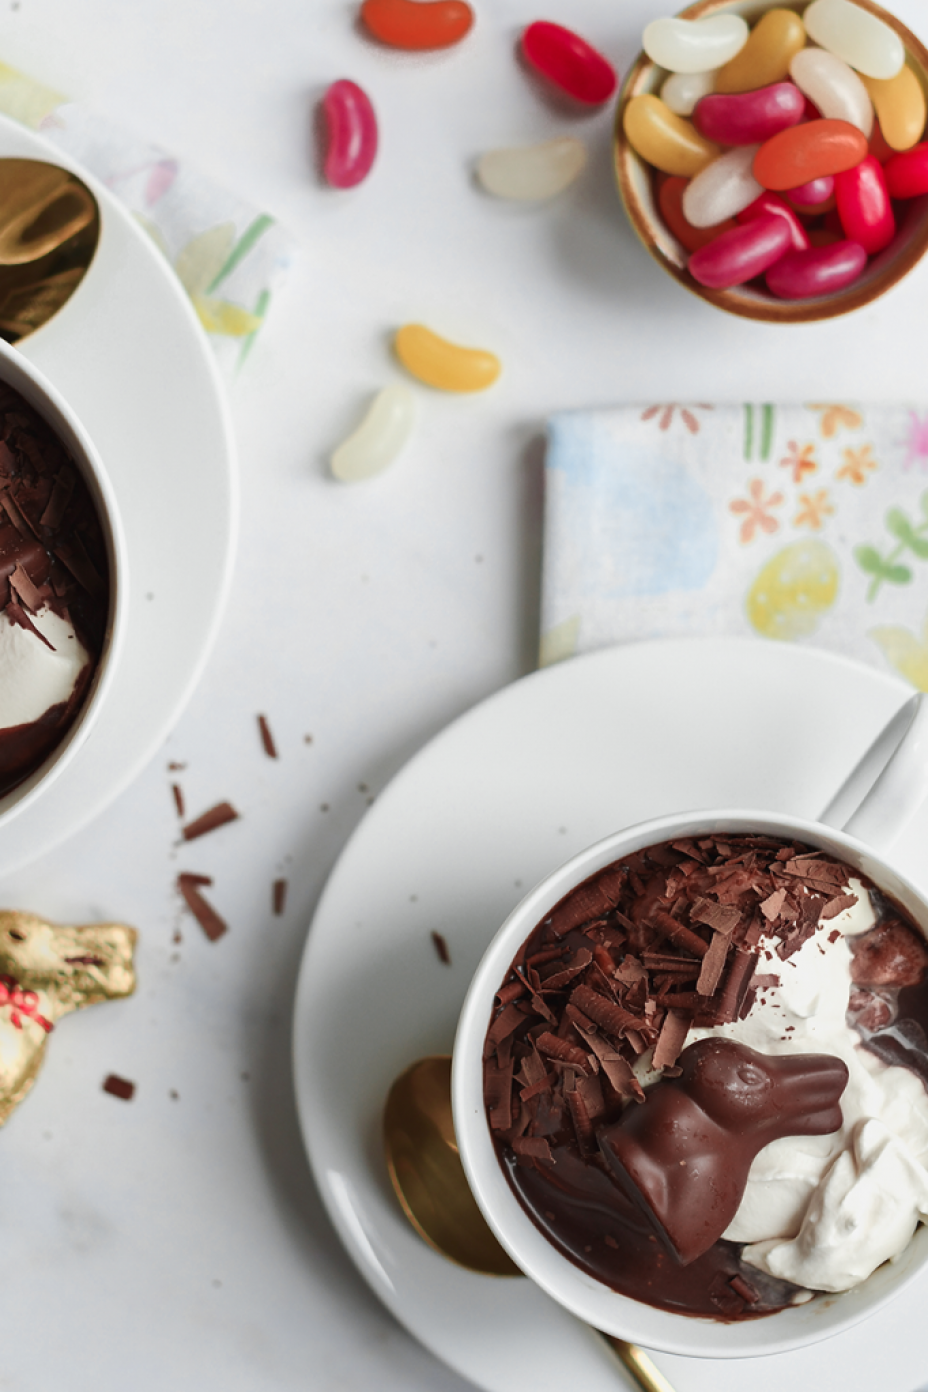 Easter hot chocolate. An indulgent treat to celebrate the season